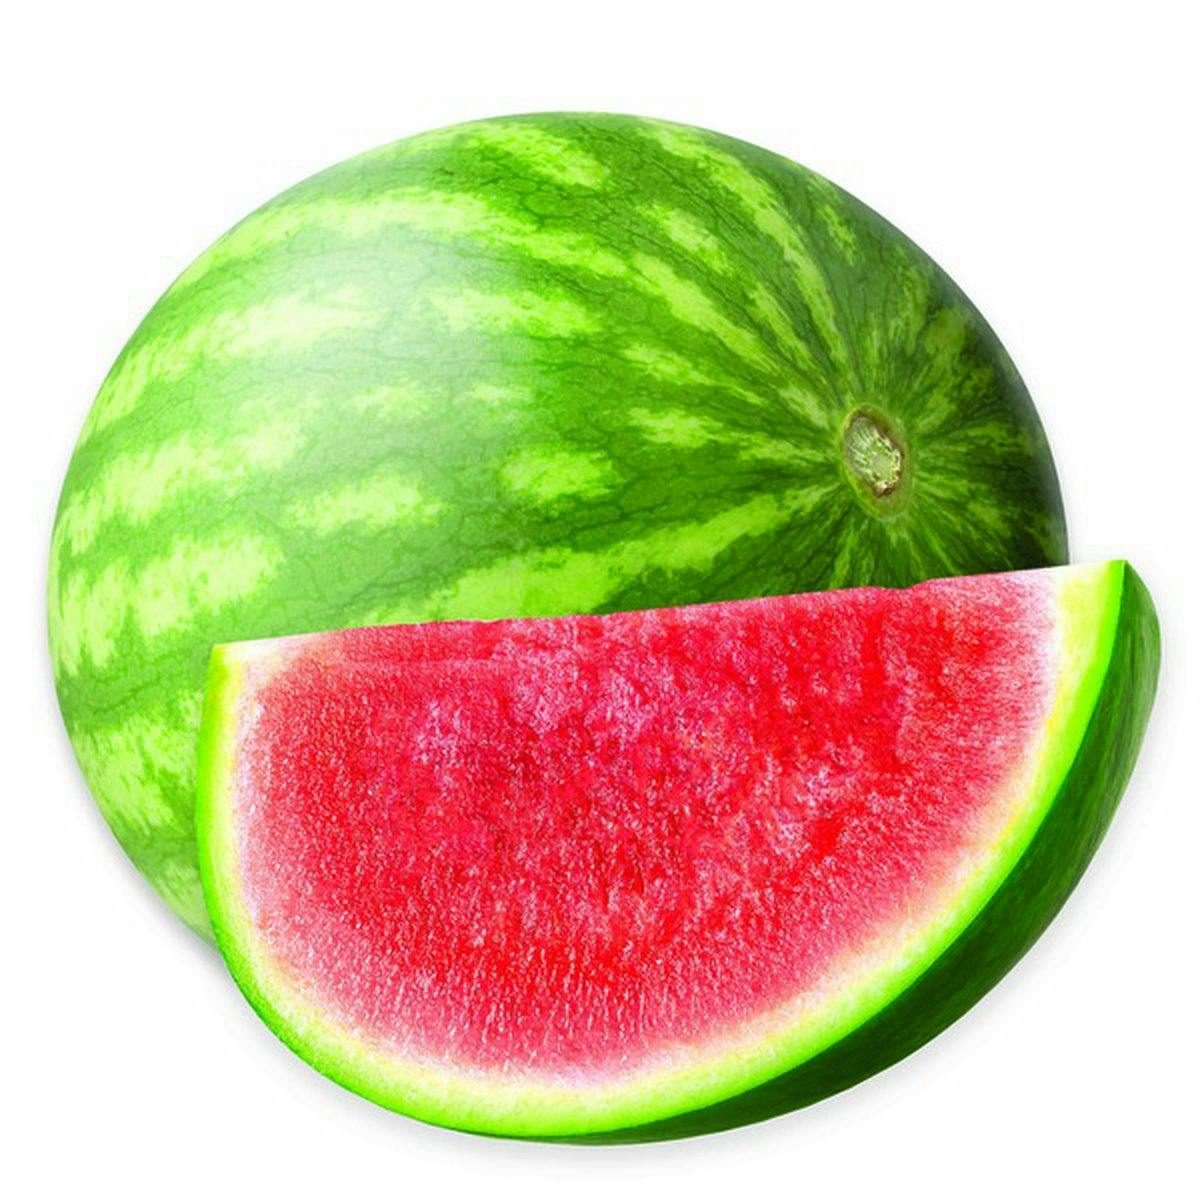 watermelon juice strained